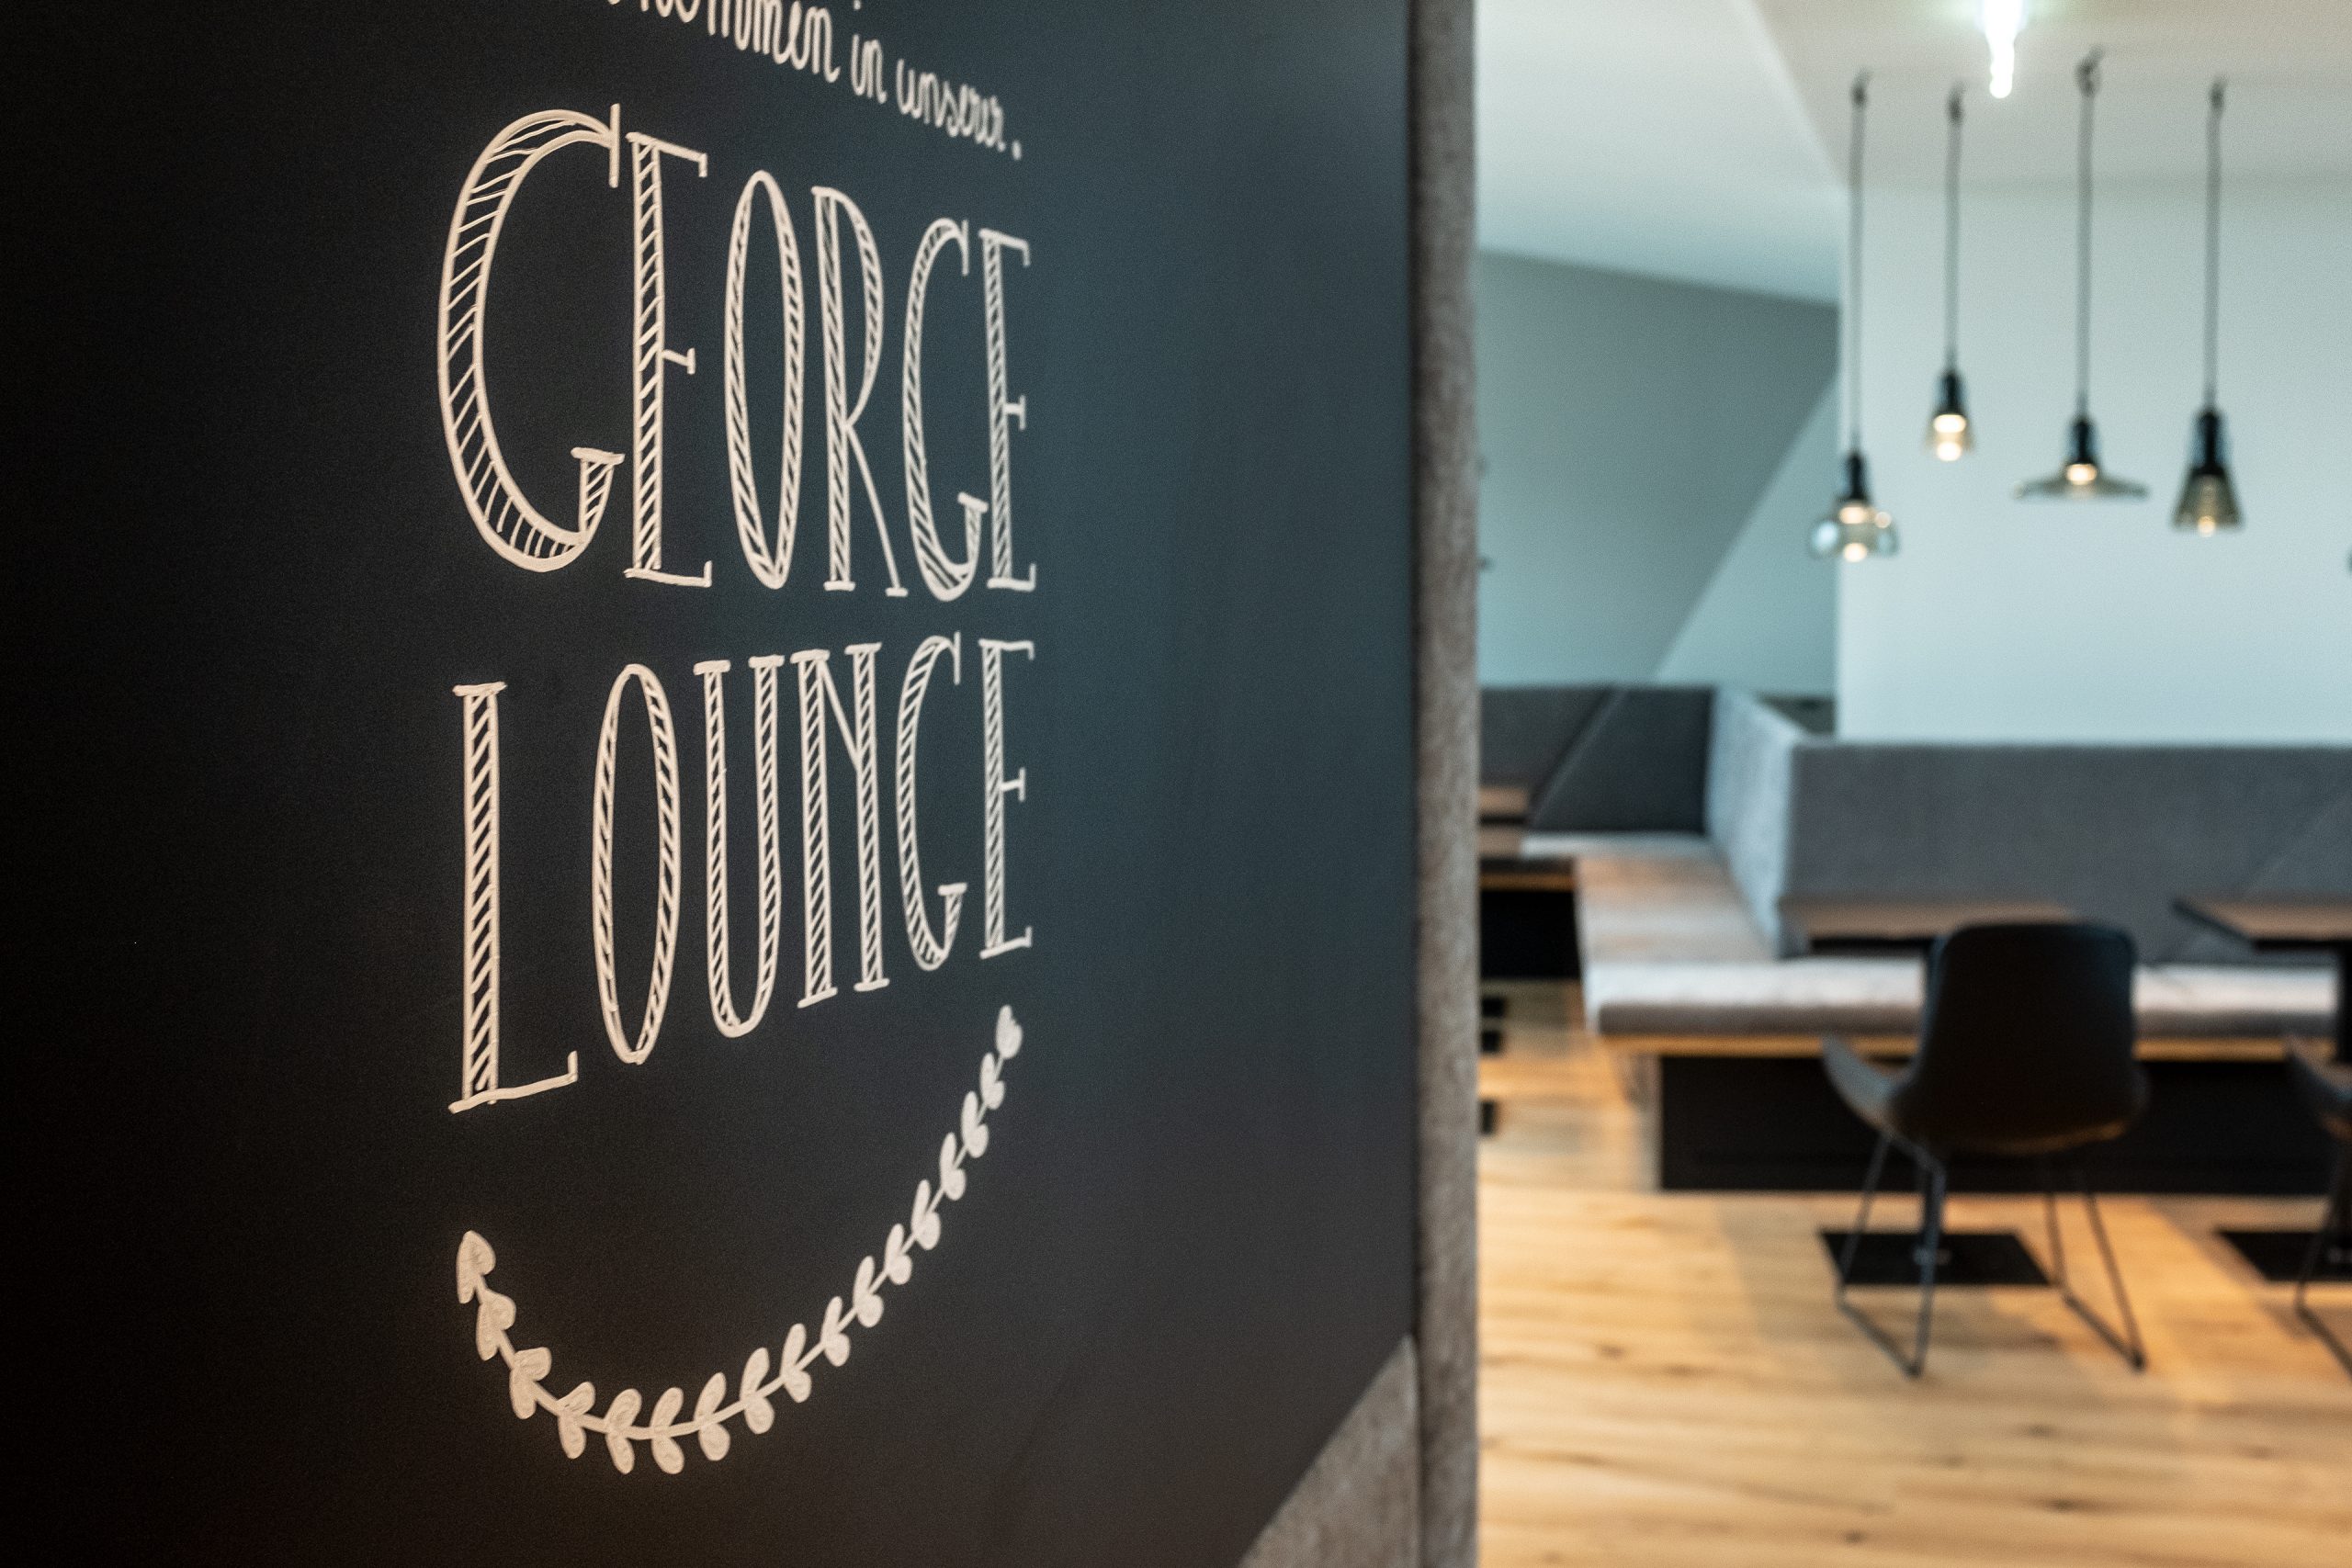 George Lounge Perron by Gappmaier Design @Stefan Zauner